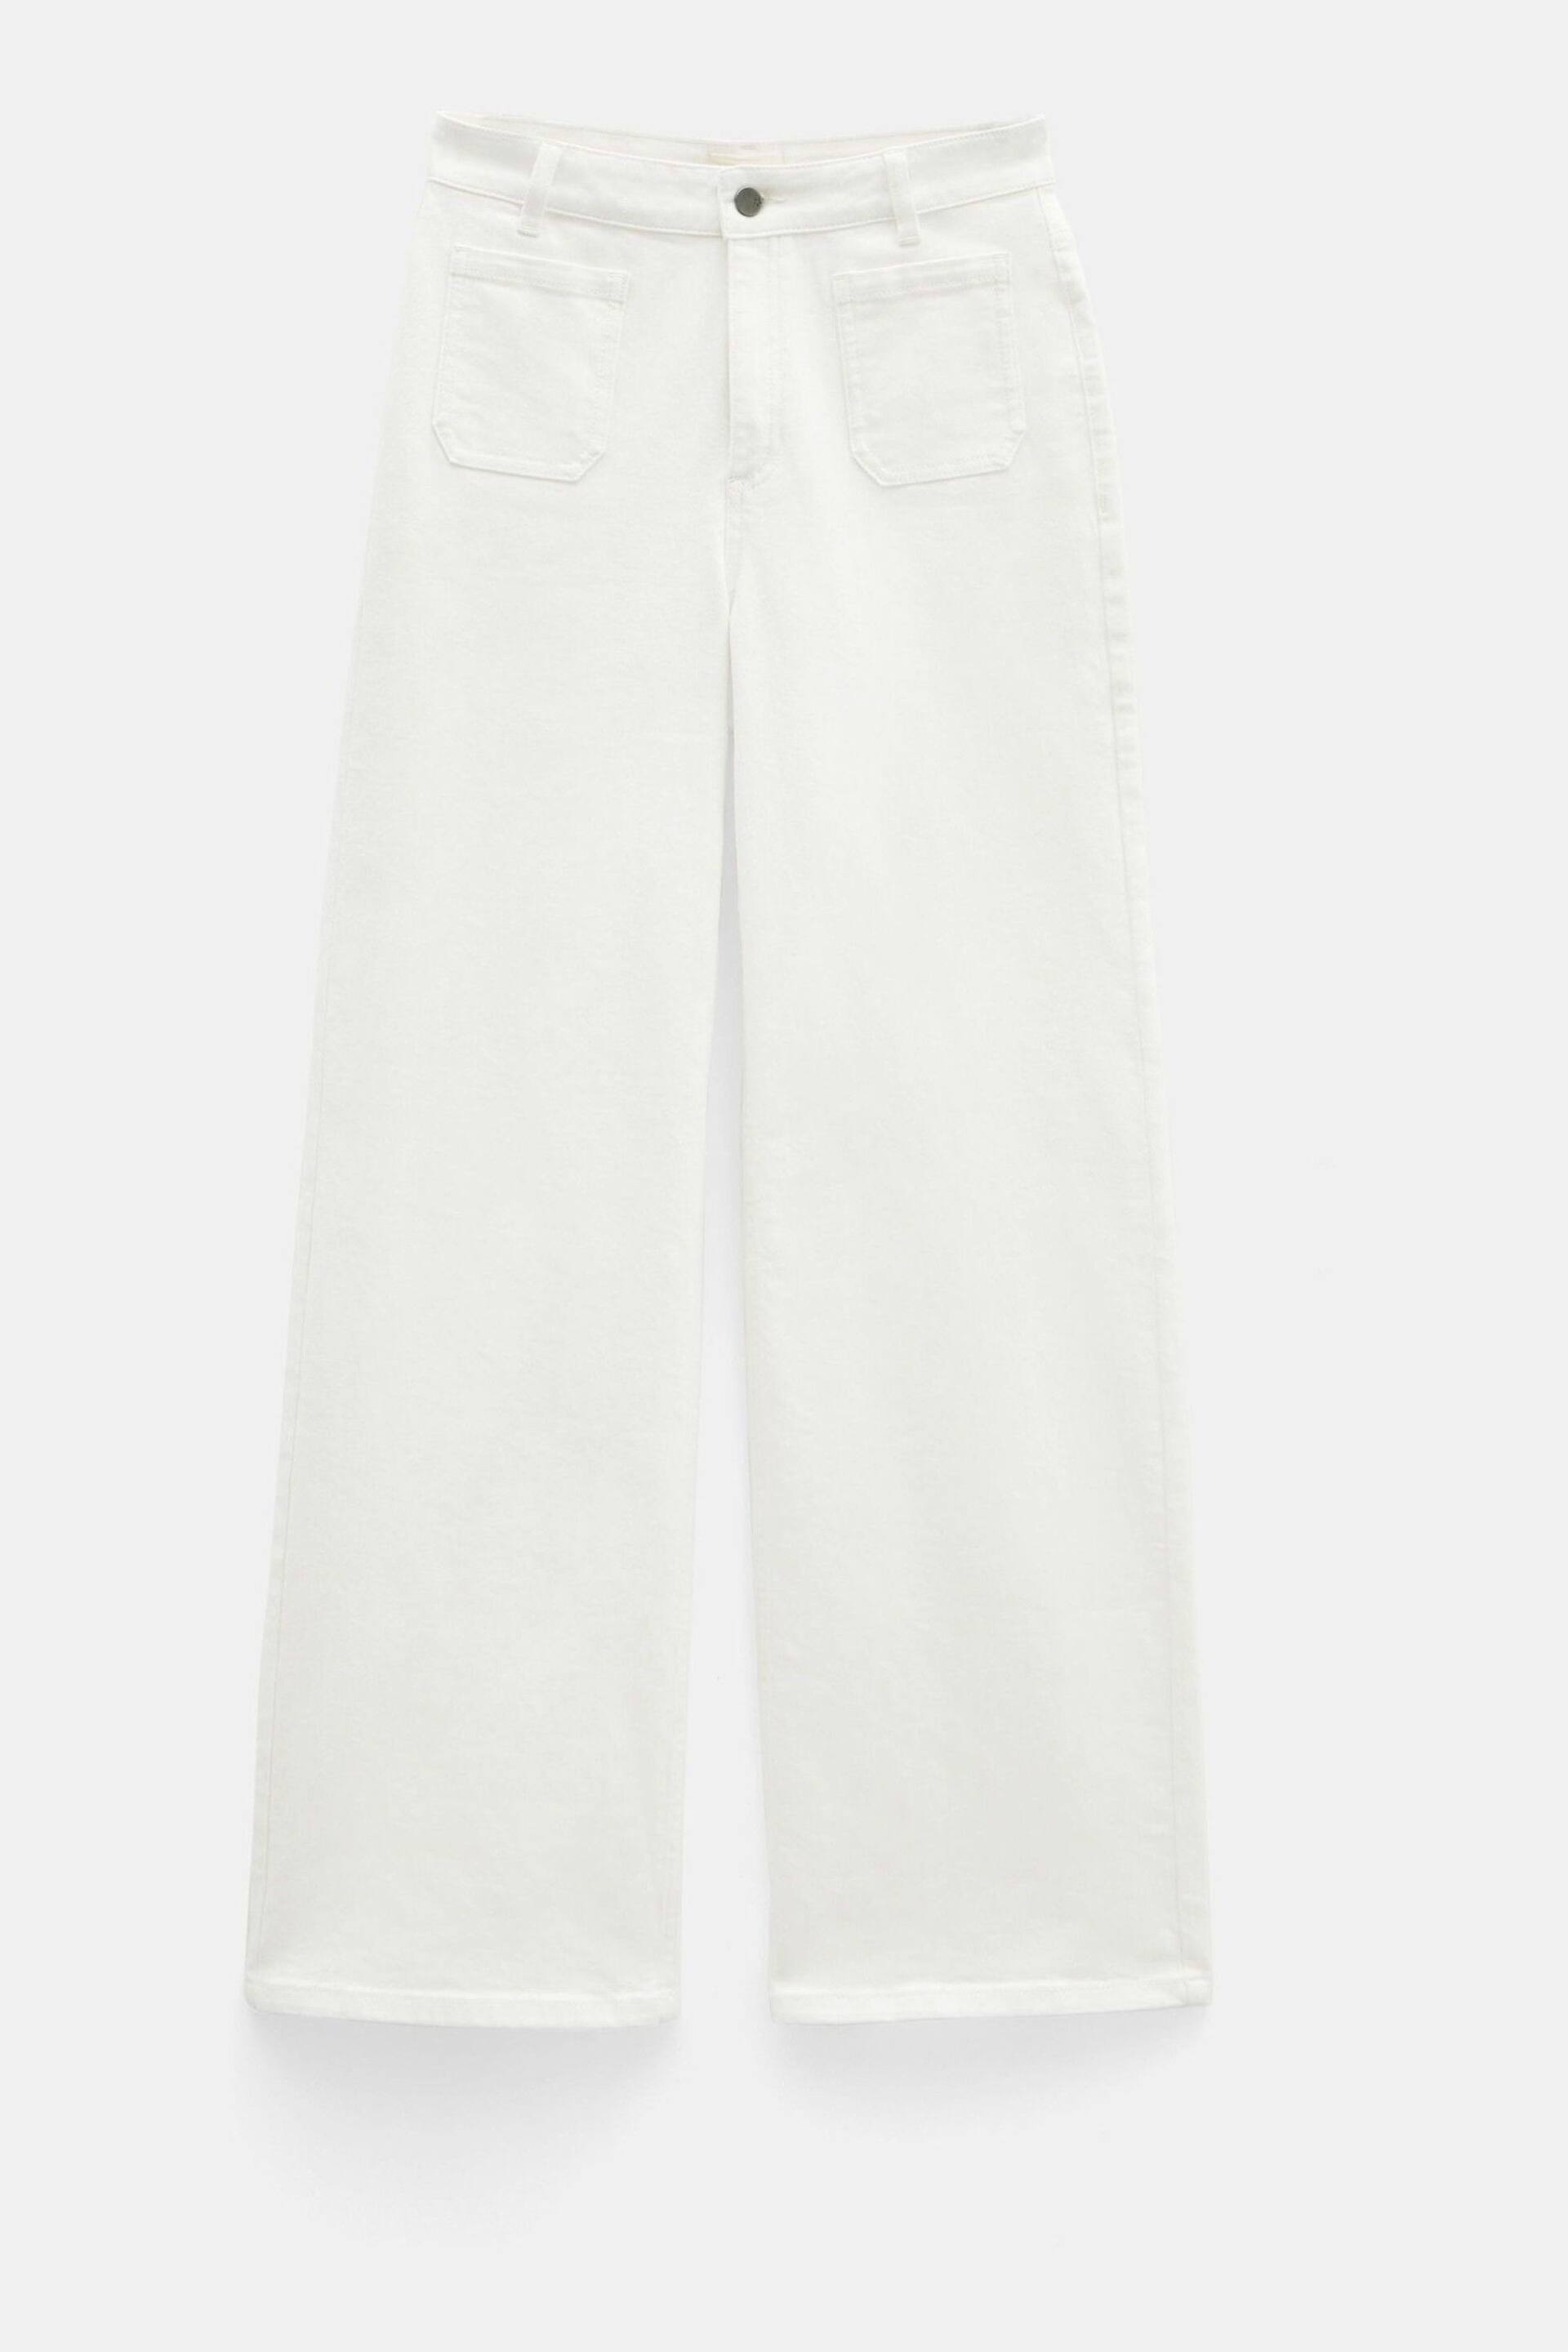 Hush White Rowan Flared Jeans - Image 5 of 5